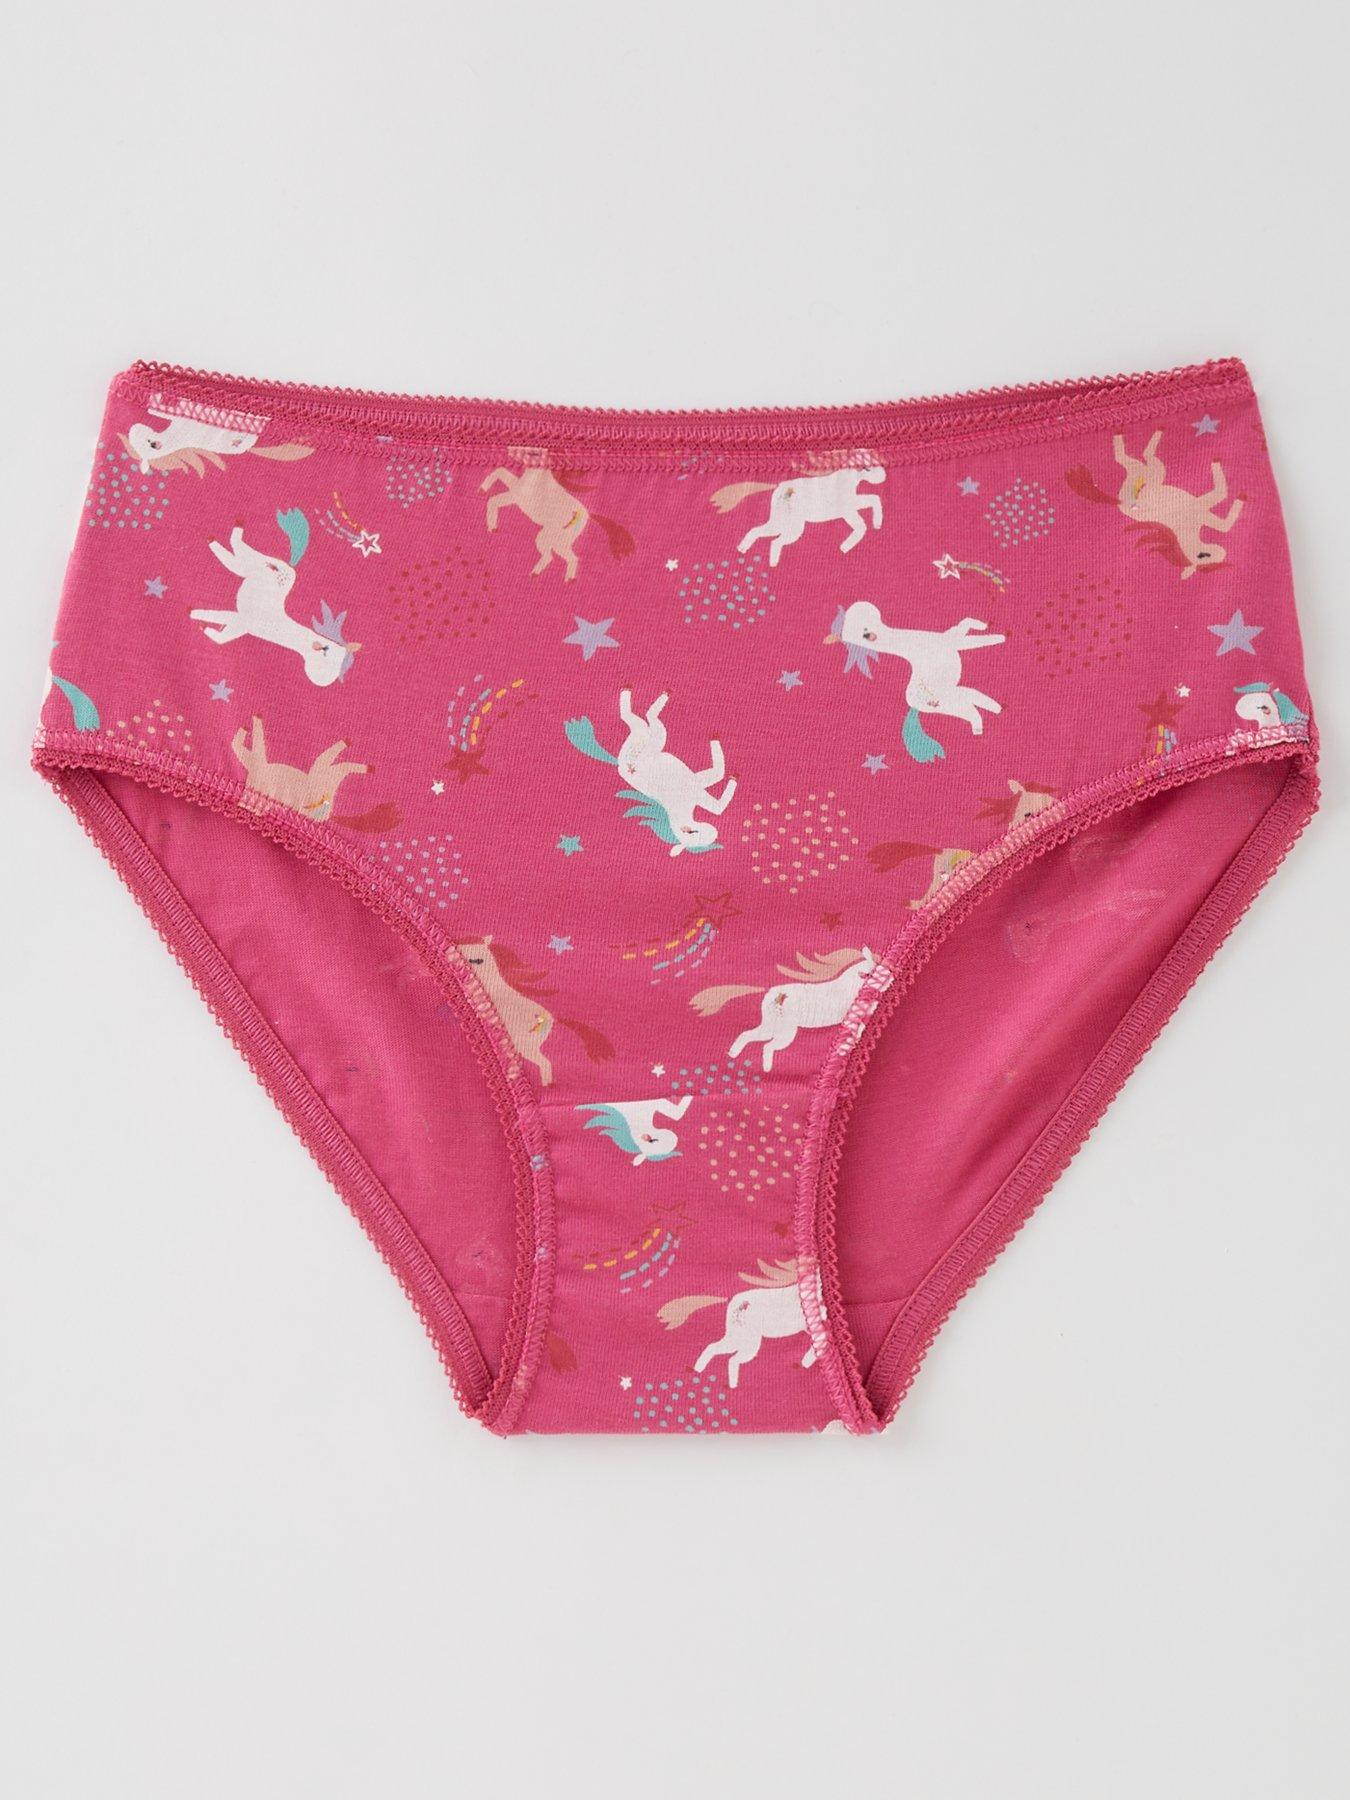 Rainbow Panties With Sparkly Unicorn High Waist Lingerie 3 Color